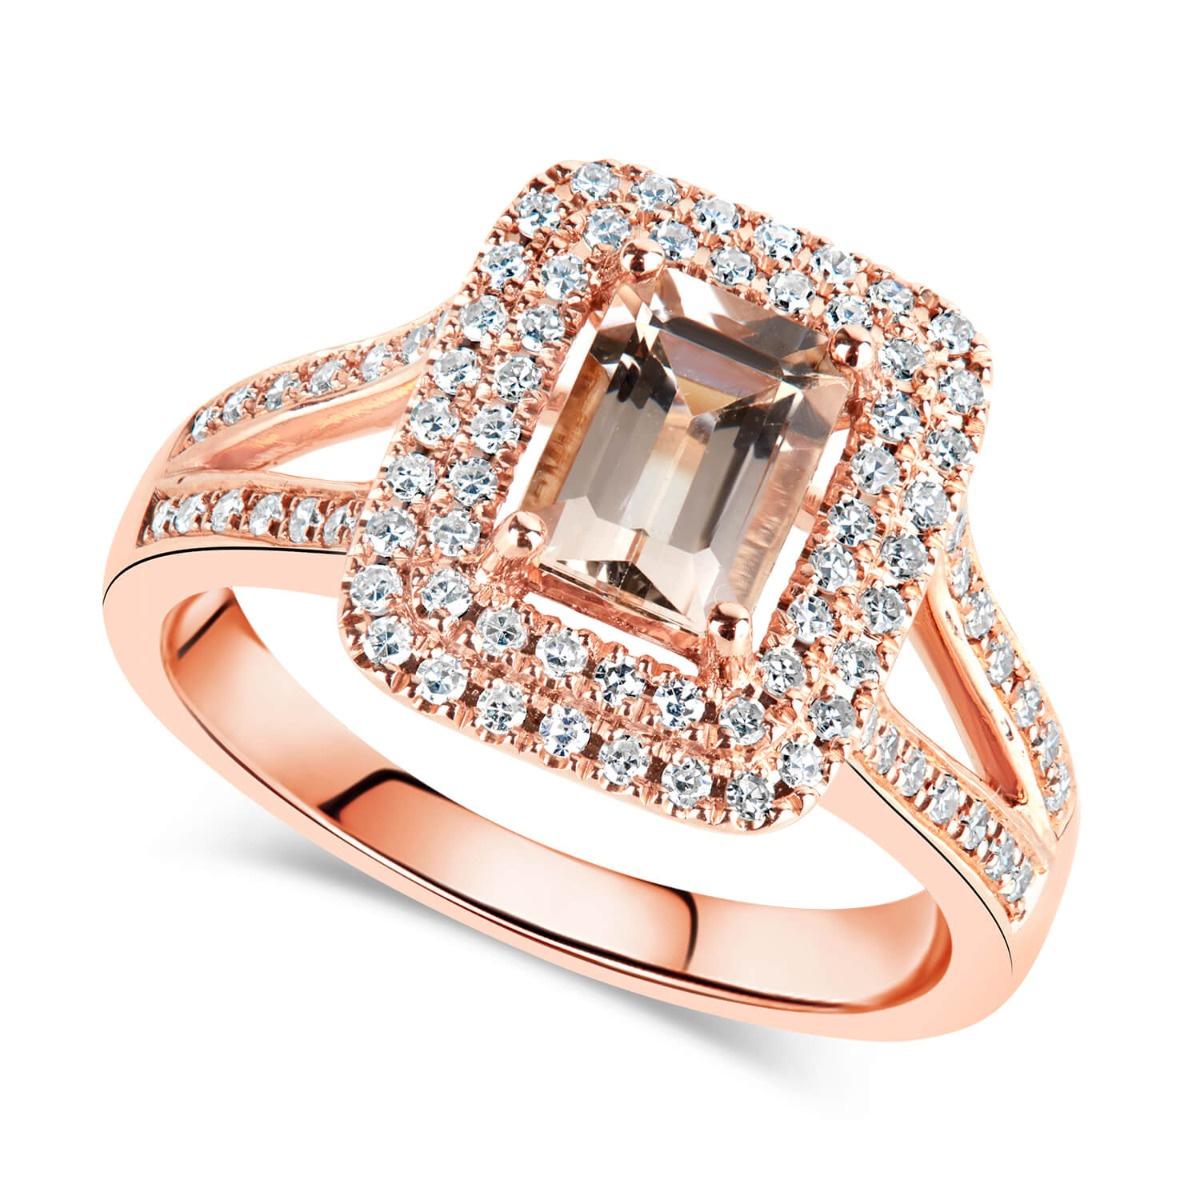 Beautiful Fraser Hart Diamond Wedding Rings Check more at  https://mtnwedding.com/wedding-ring/fraser-hart-diamond-wedding-rings